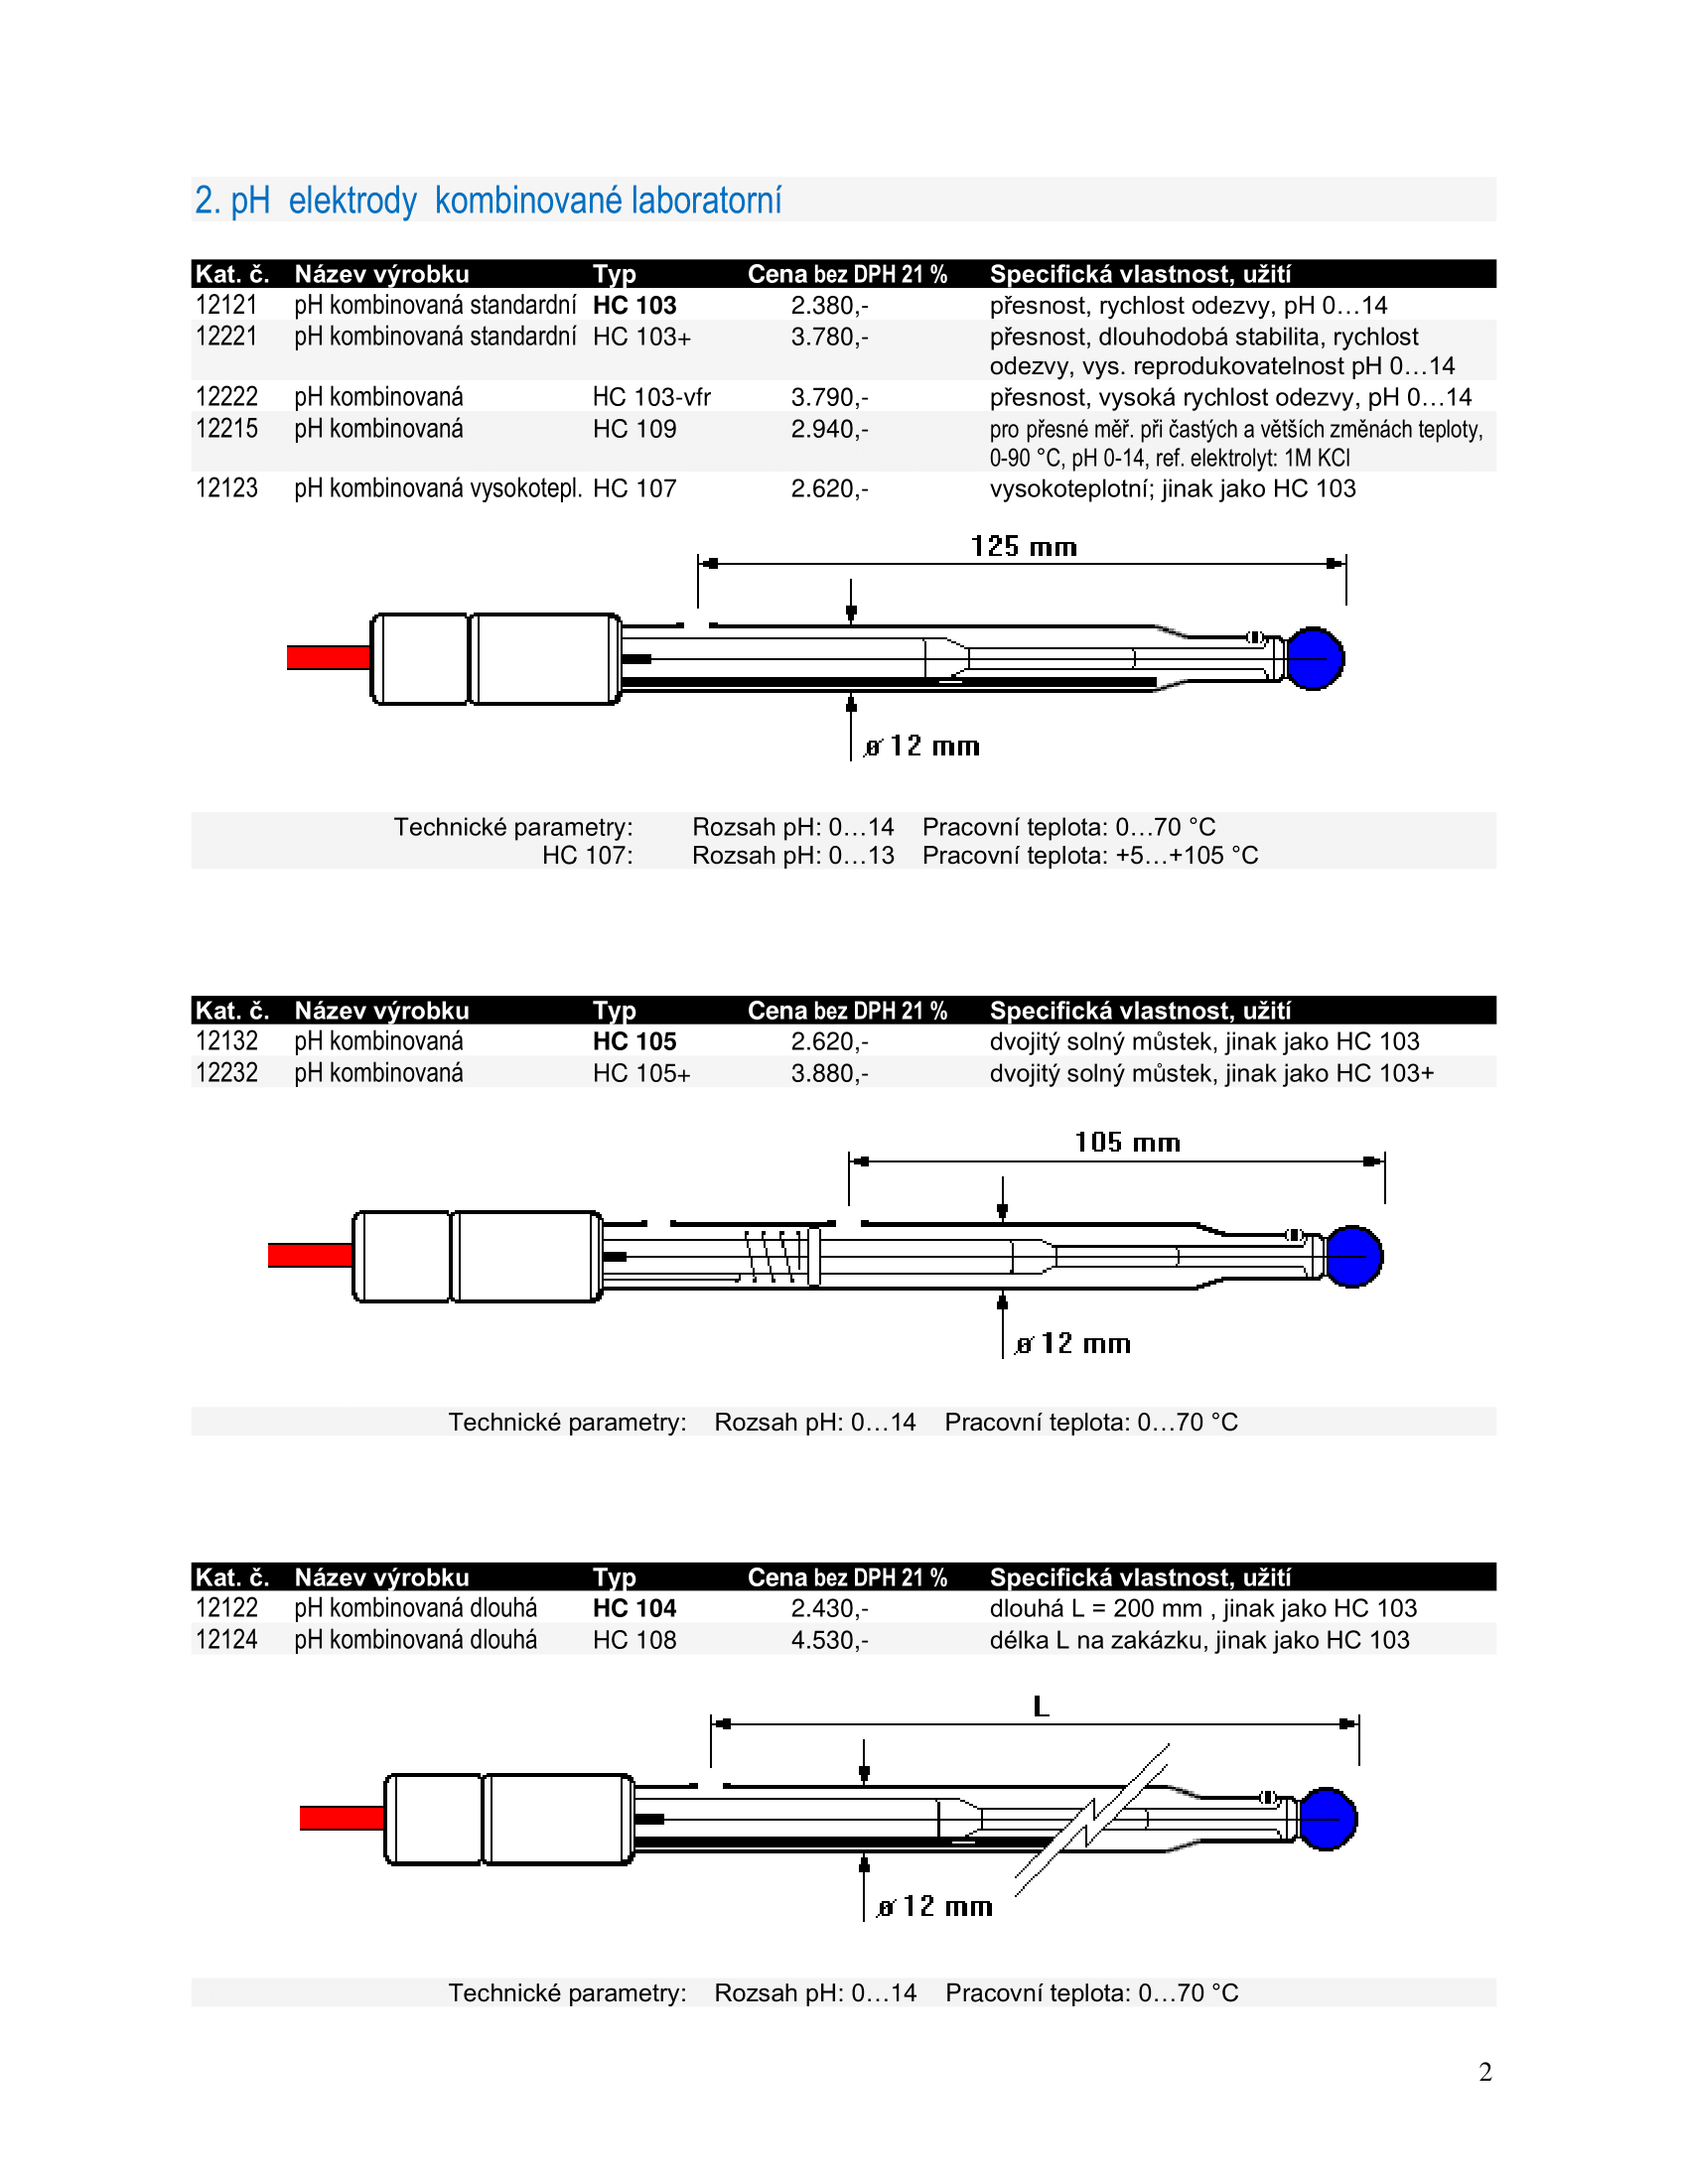 ph-elektrody-laboratorni-2022-2.png